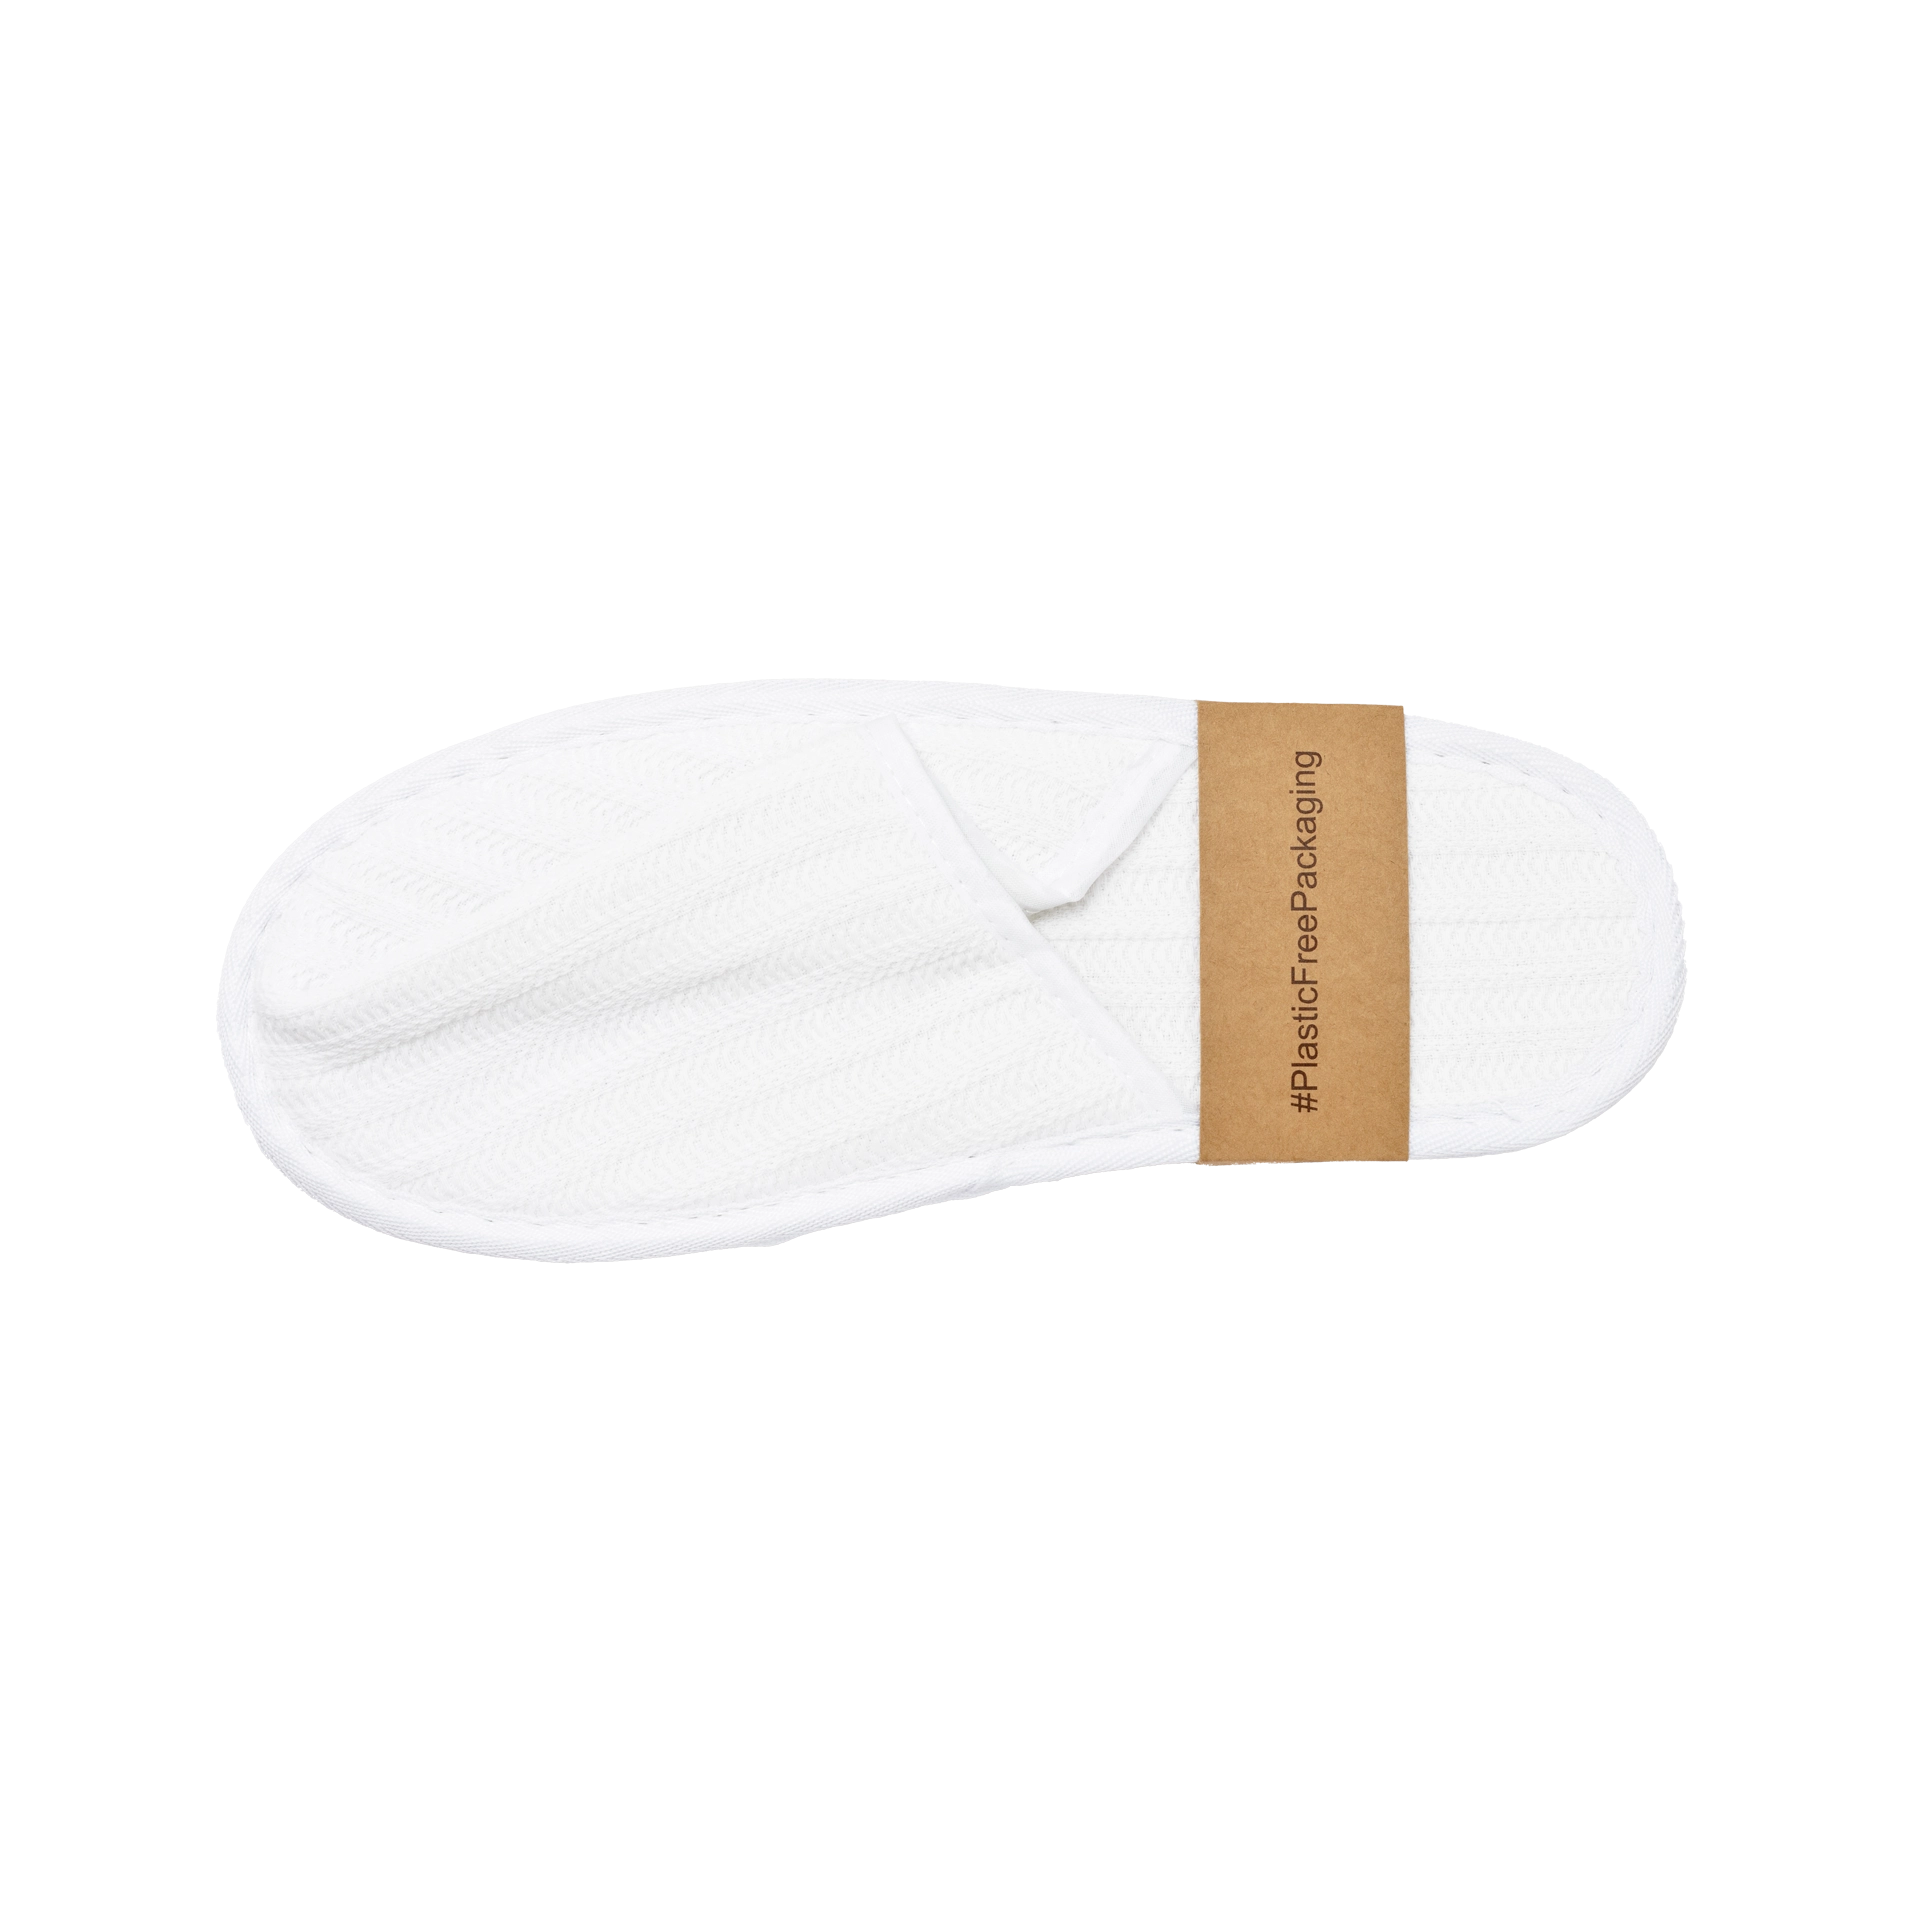 Hotel Slipper geschlossen 100% Baumwolle Nature Piquet weiß 28,5 cm Noppensohle 5 mm (Papierschleife)